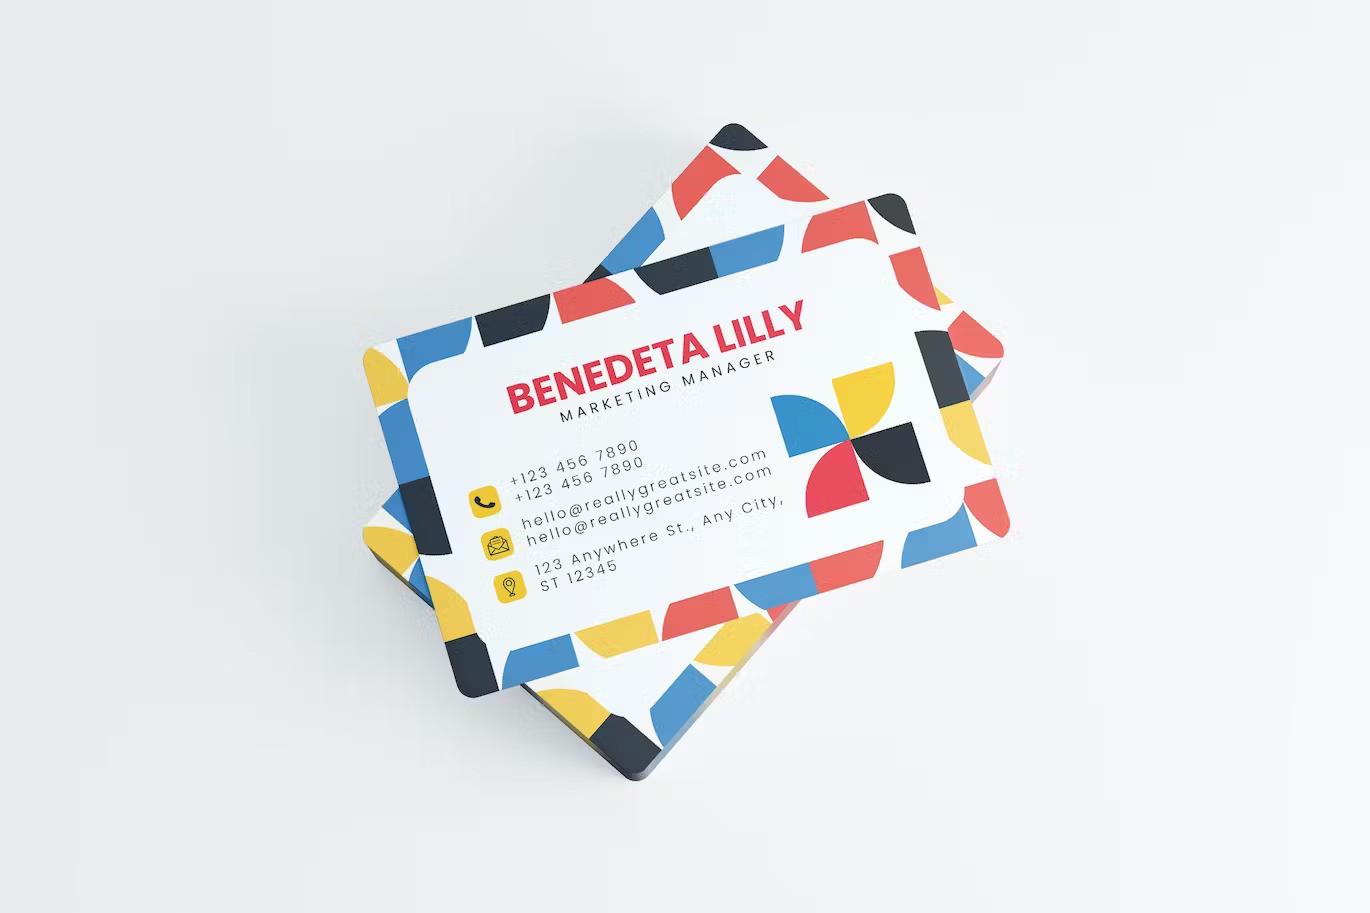 A marketing Business card Template